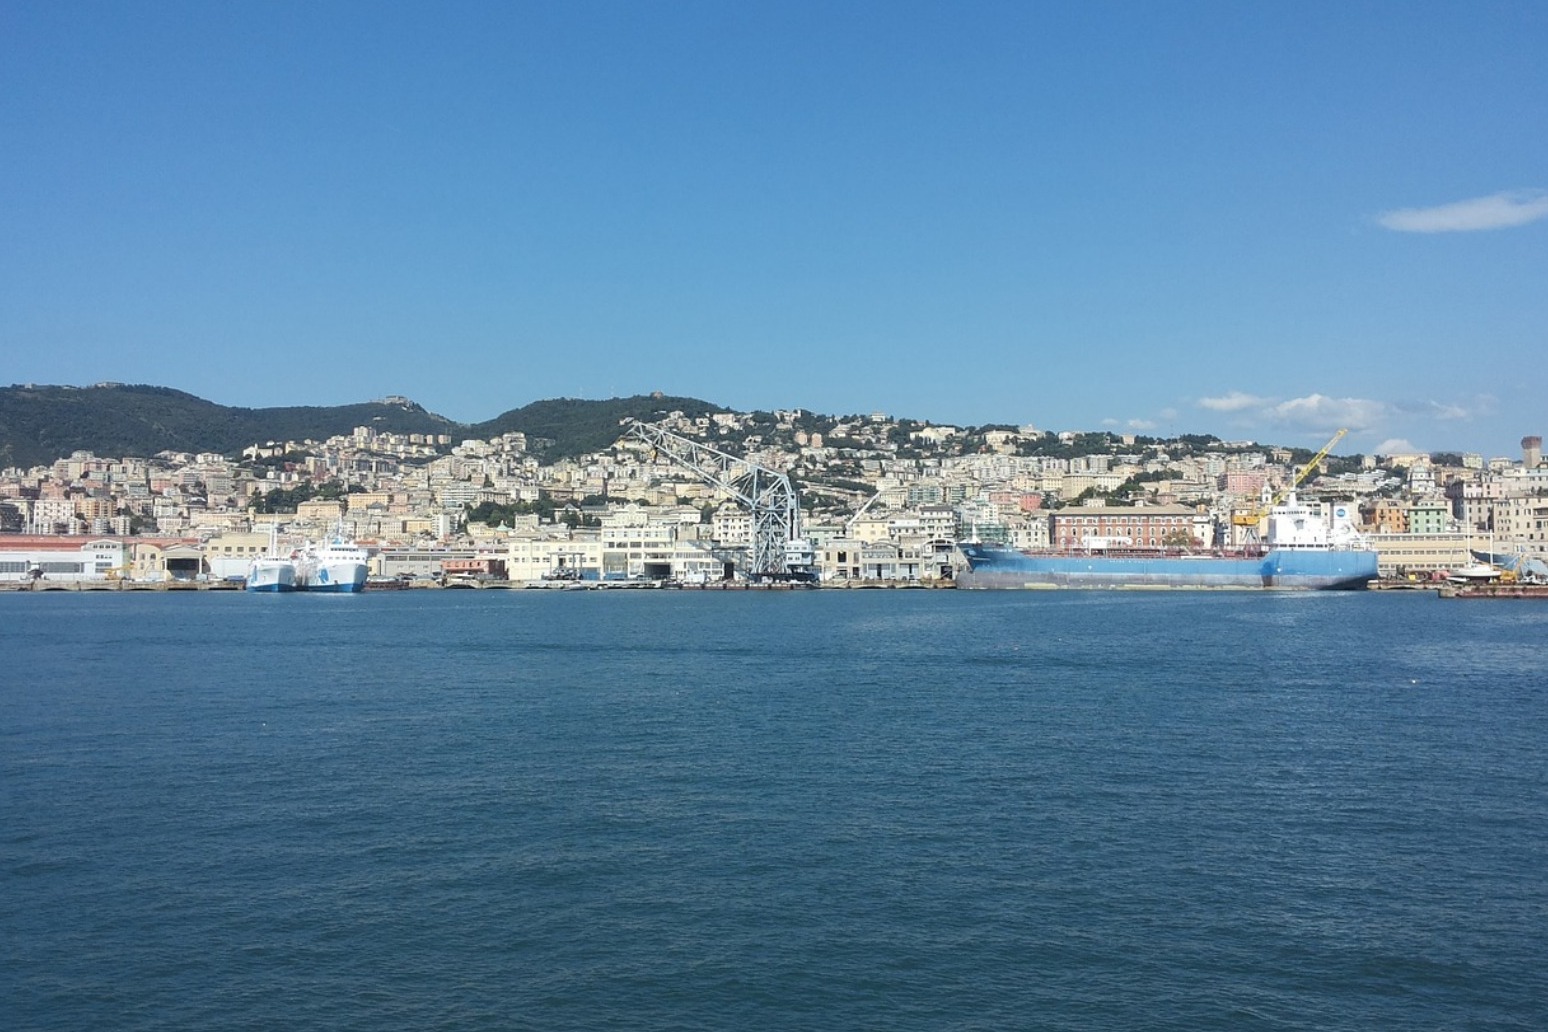 Genoa bridge operator stops short of an apology 